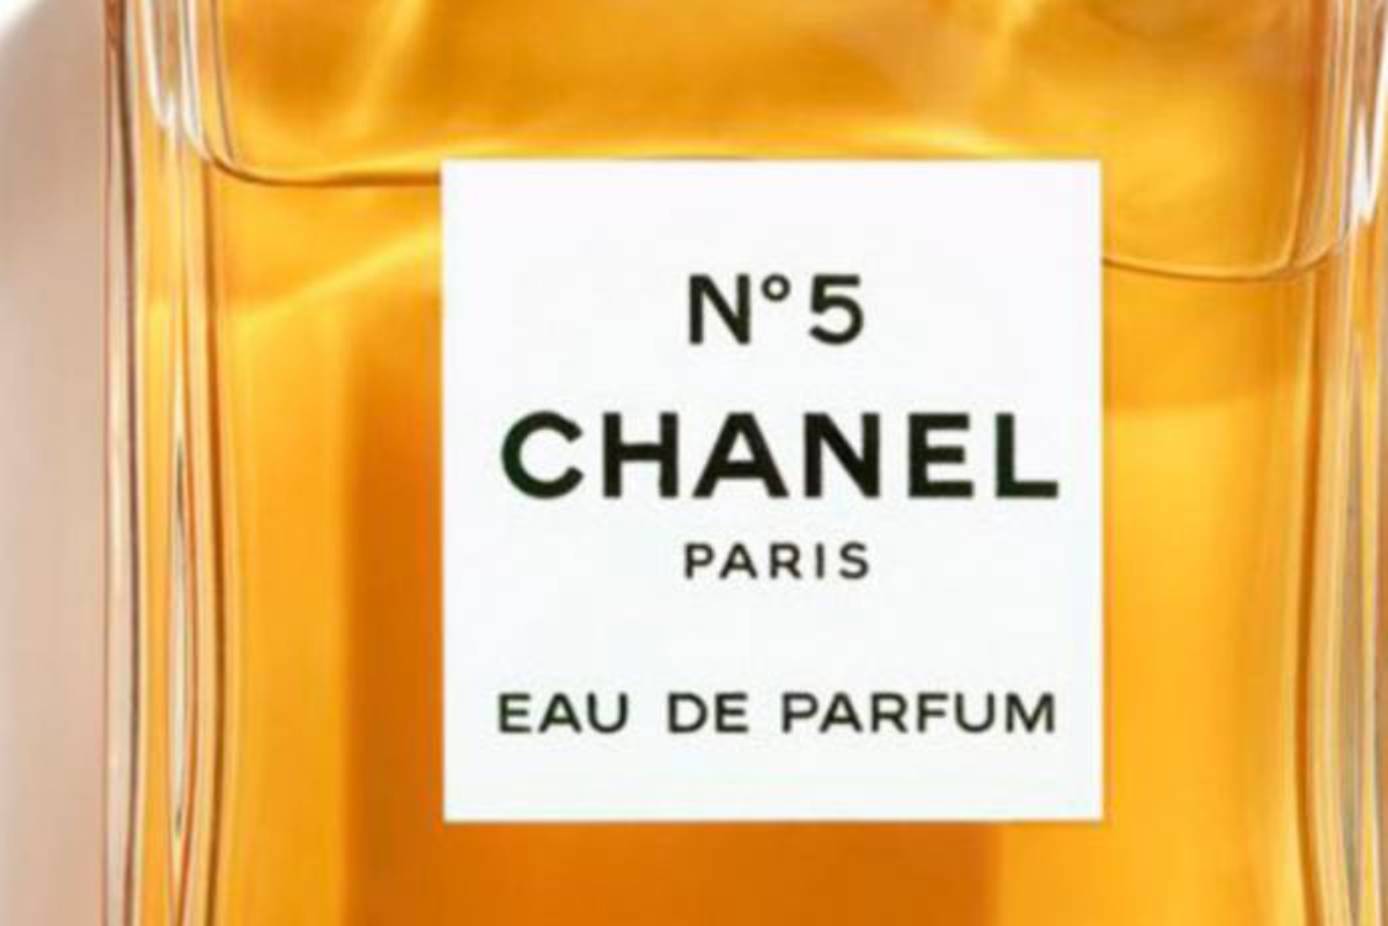 Chanel Responds to Social Media Controversy Over Advent Calendar – WWD